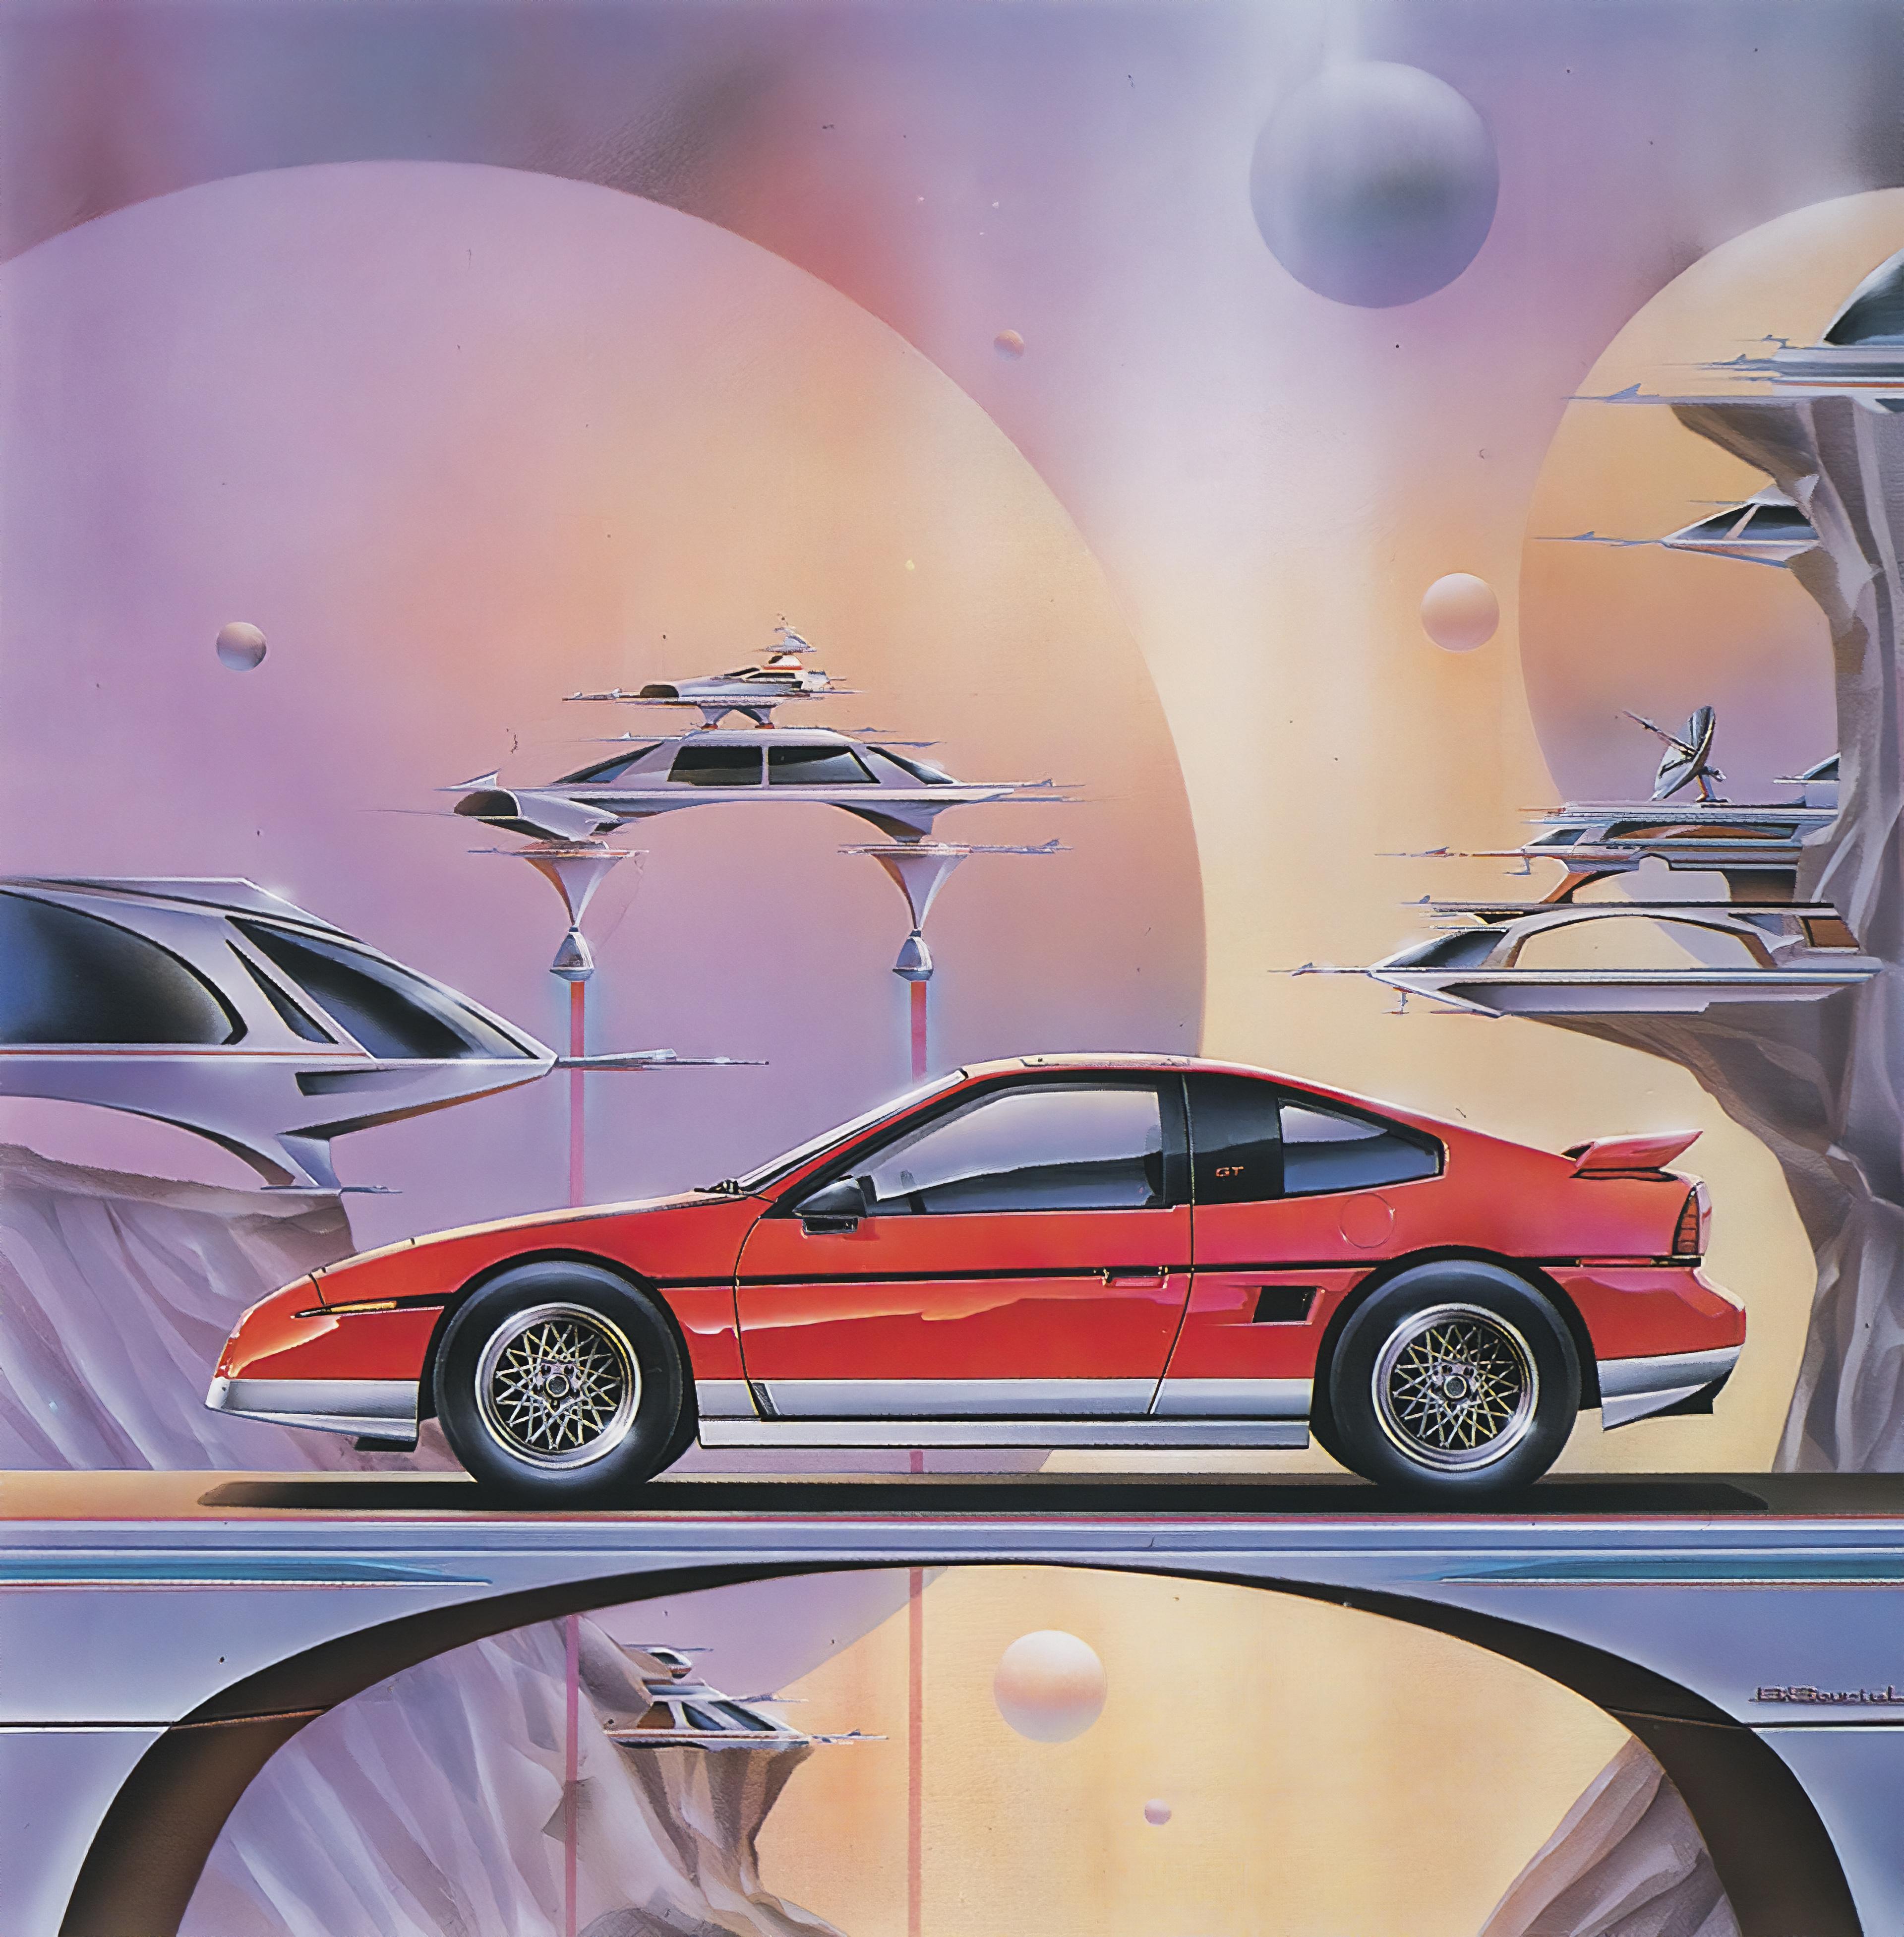 4k Upscale Of The Pontiac Fiero Artwork By Brian Sauriol